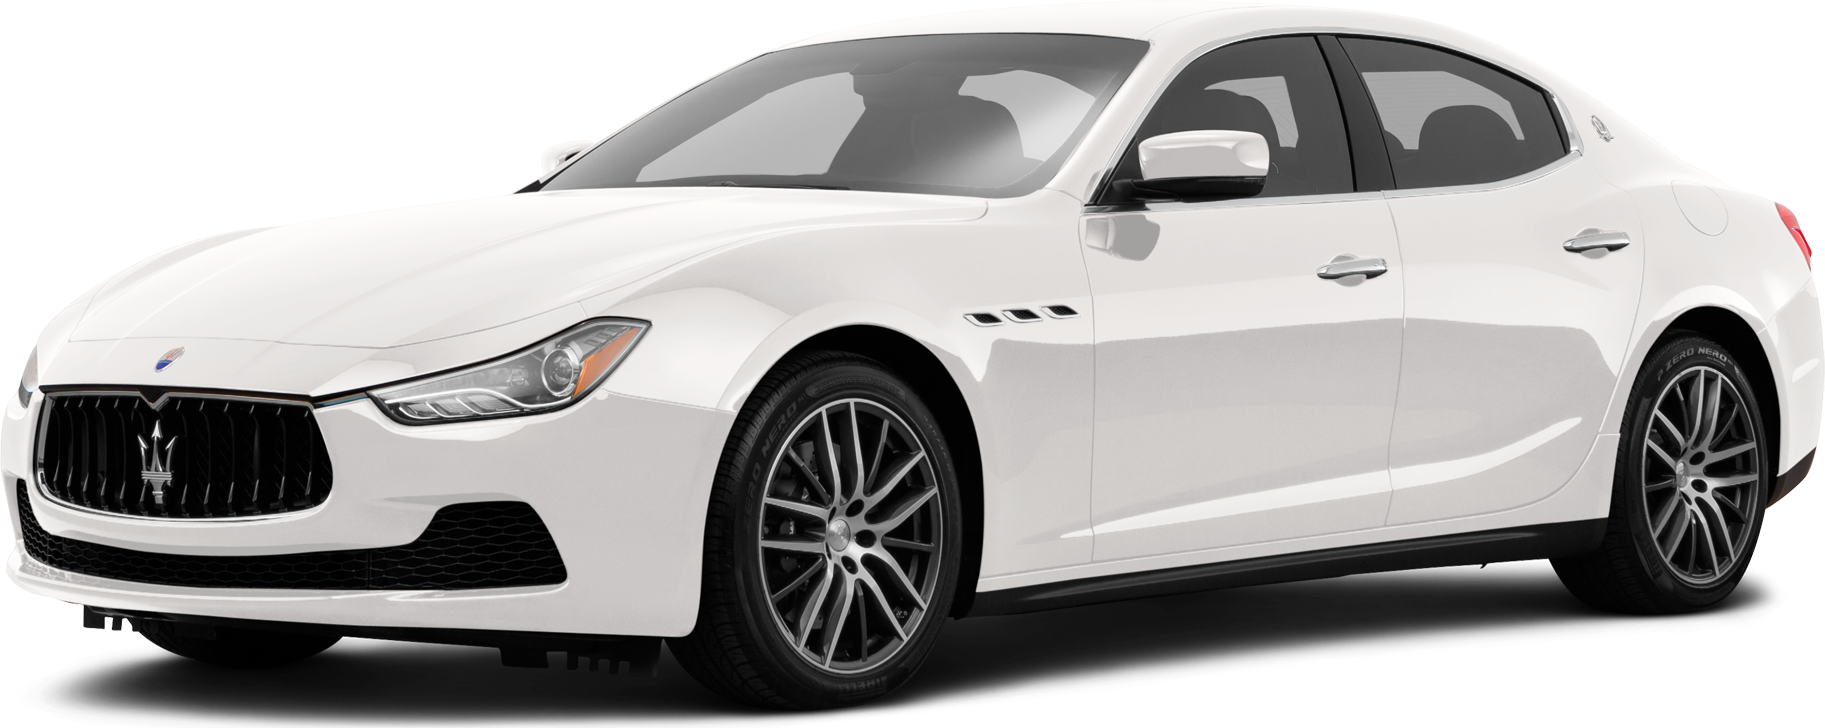 Maserati Ghibli S Q4 3.0 V6 Automatica MY2016!!! 95000 km für